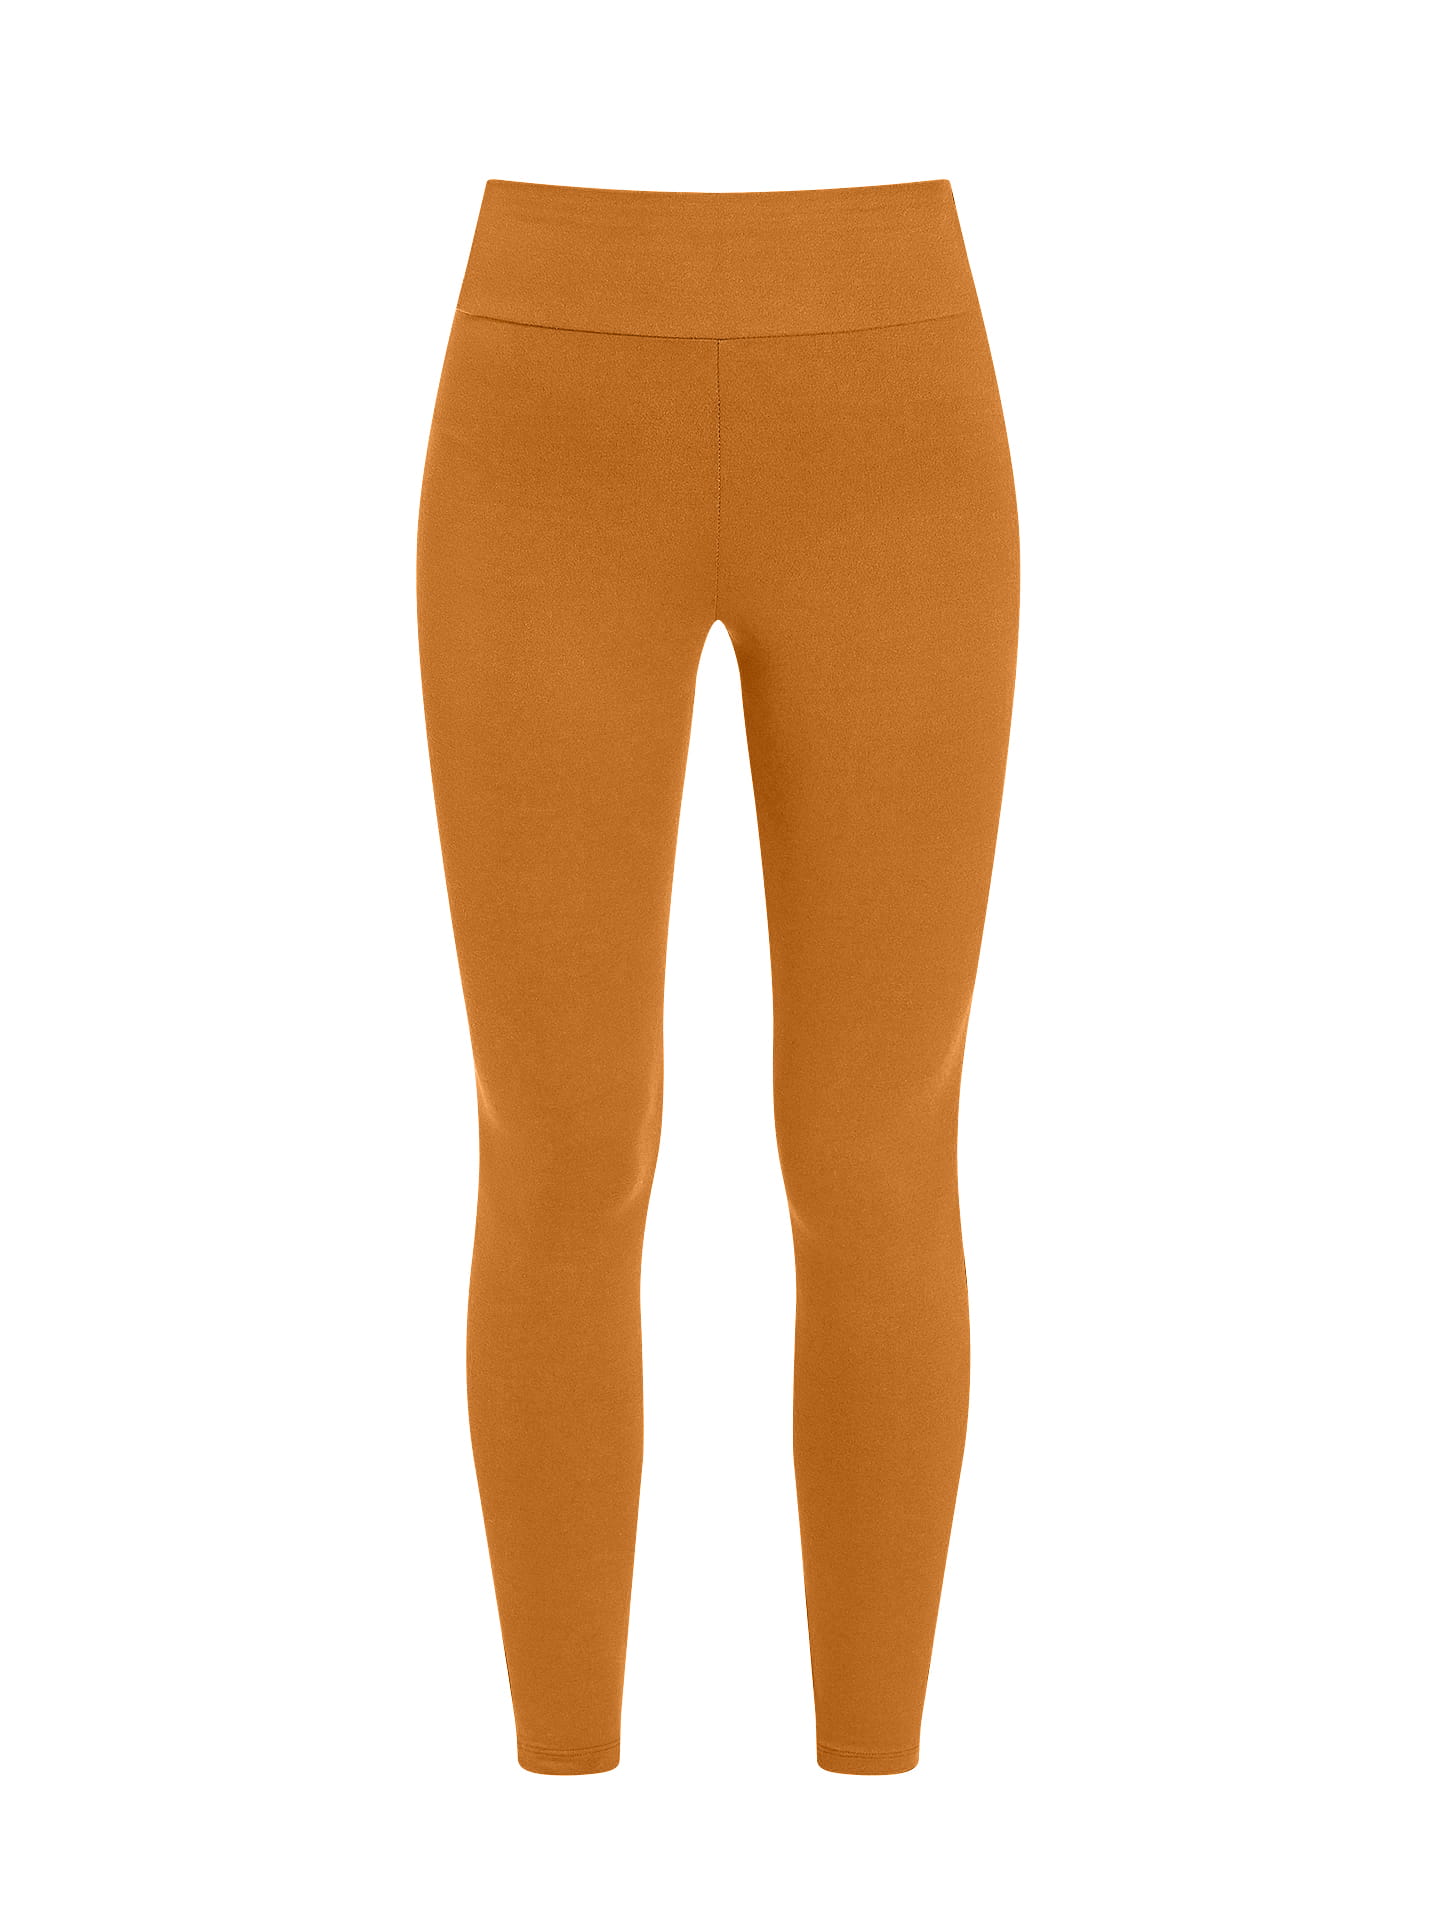 Monochrome leggings in burnt orange, 7.99€